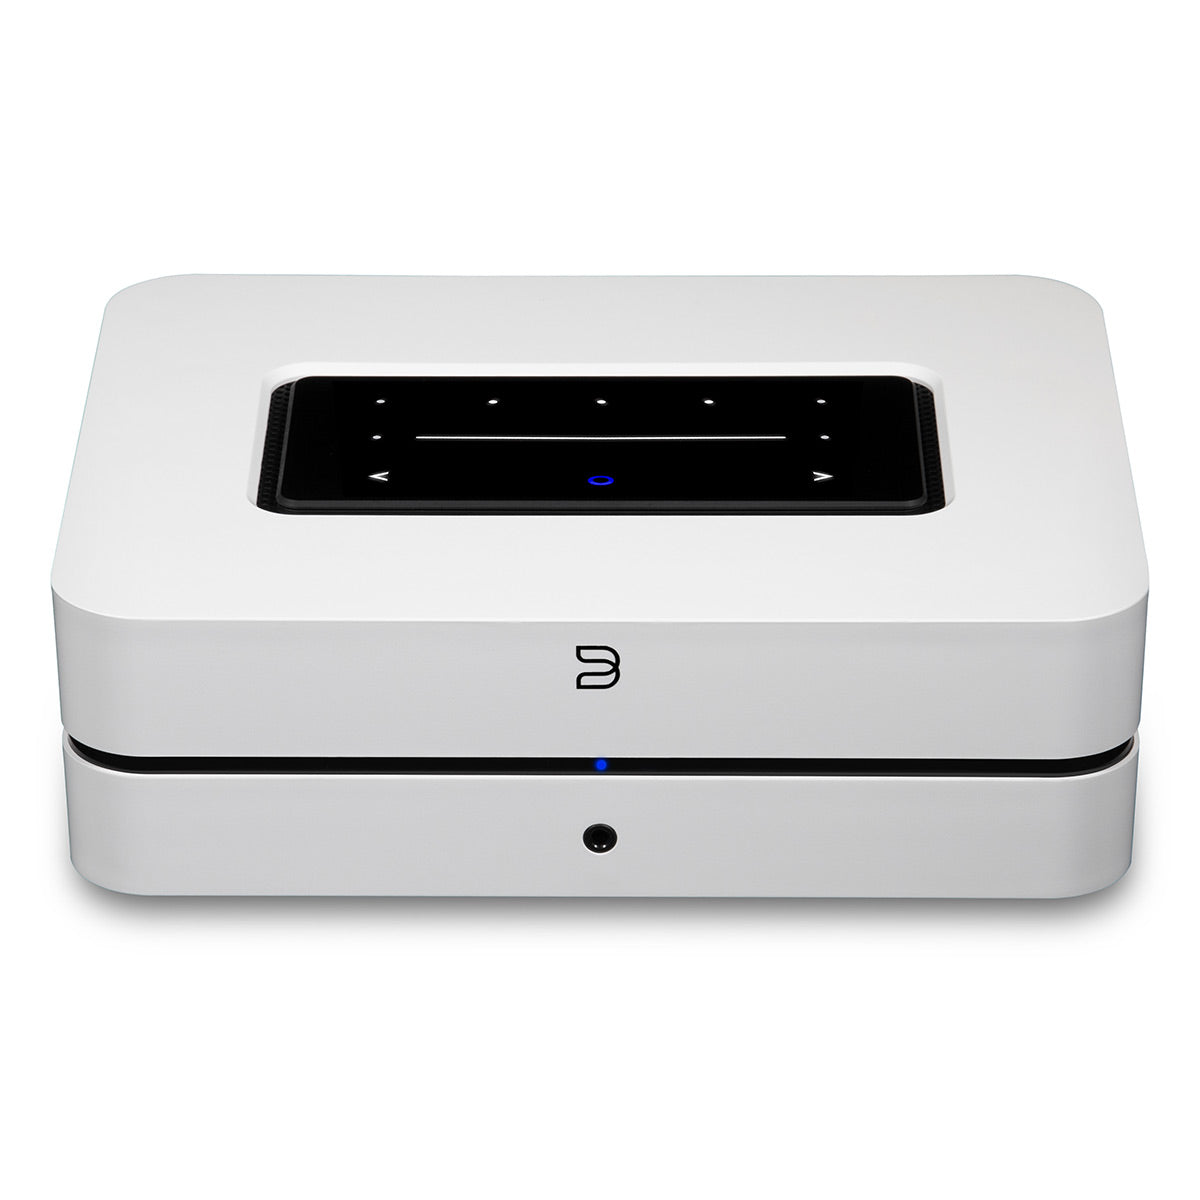 Bluesound Powernode Wireless Multi-Room Hi-Res Music Streaming Amplifier - Gen 3 (White)